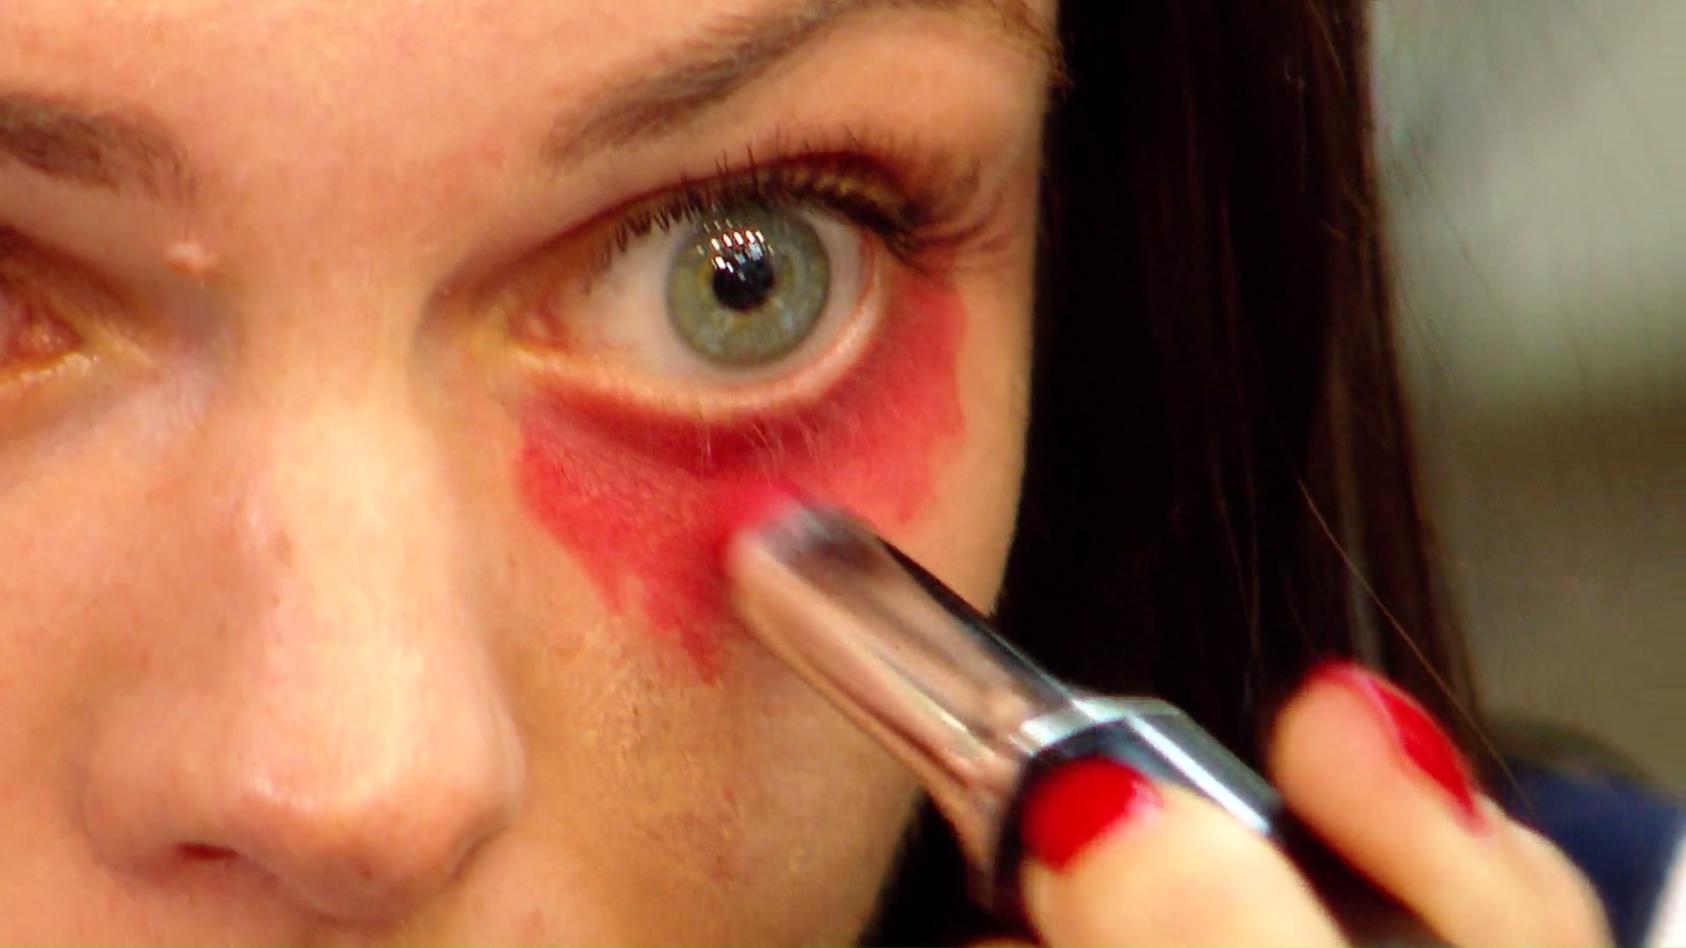 Lippenstift gegen Augenringe - wie bitte? Skurrile Schminktipps im Test